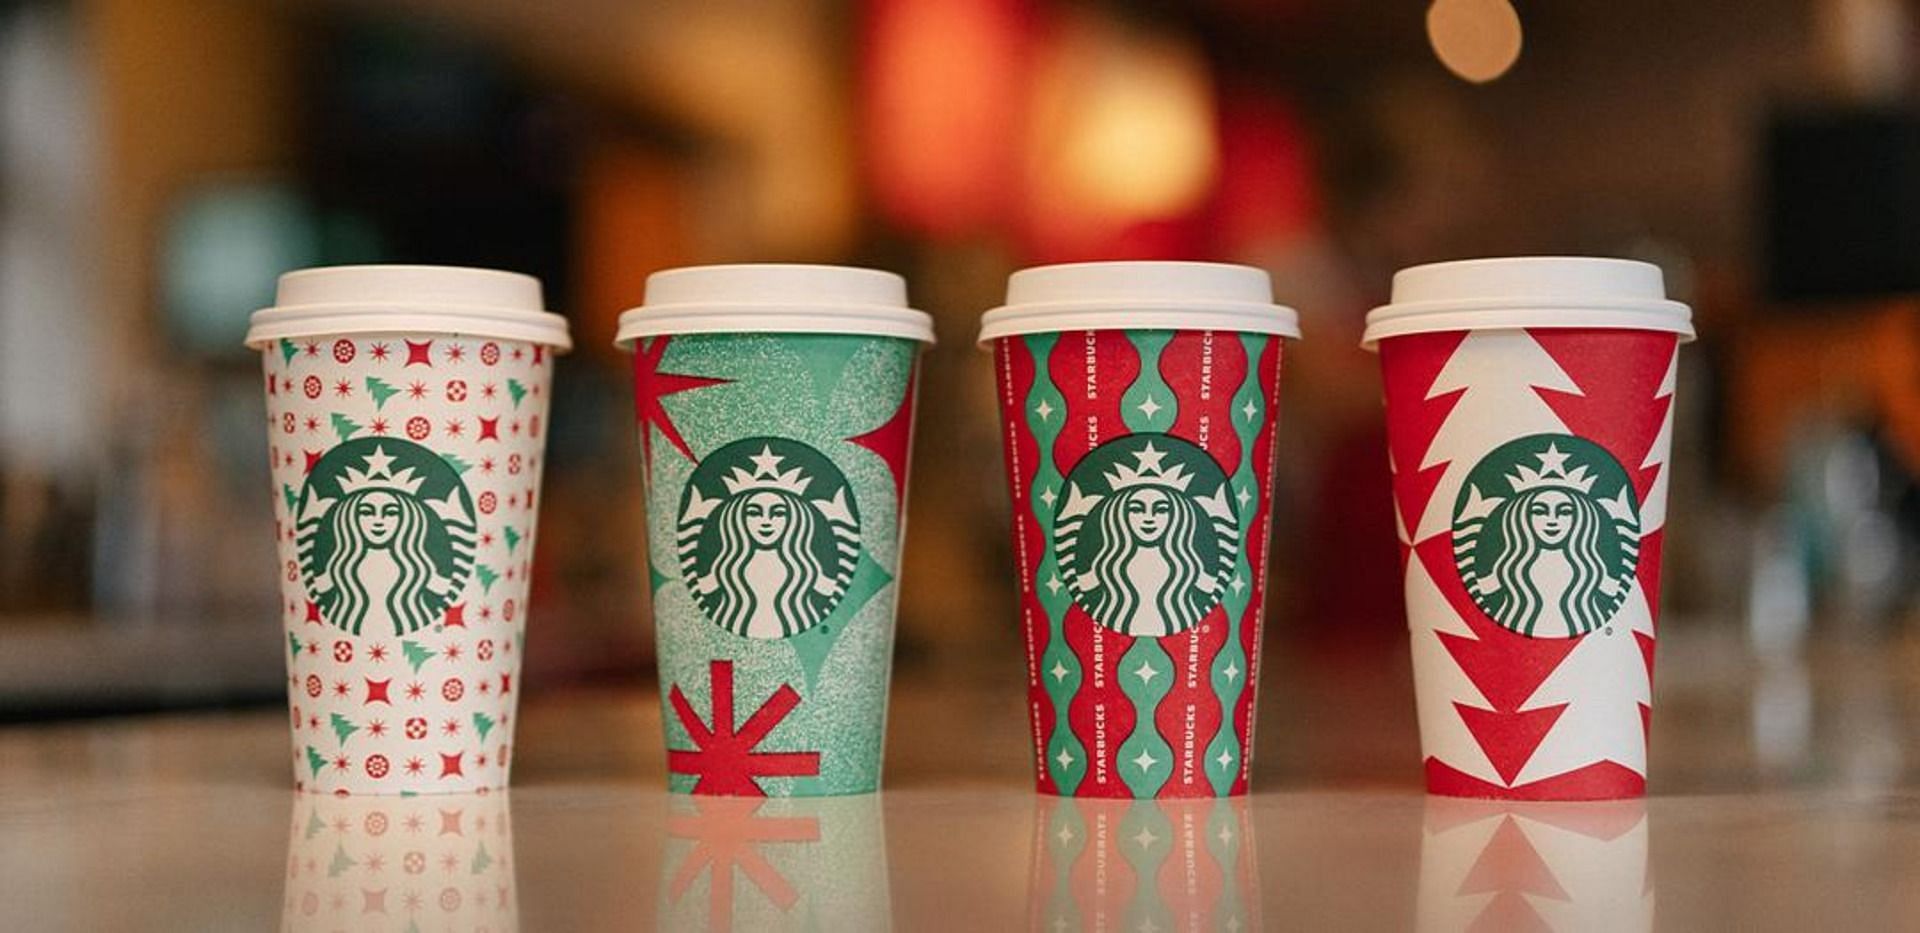 Starbucks&#039; designs for red cups this season (Image via Starbucks)